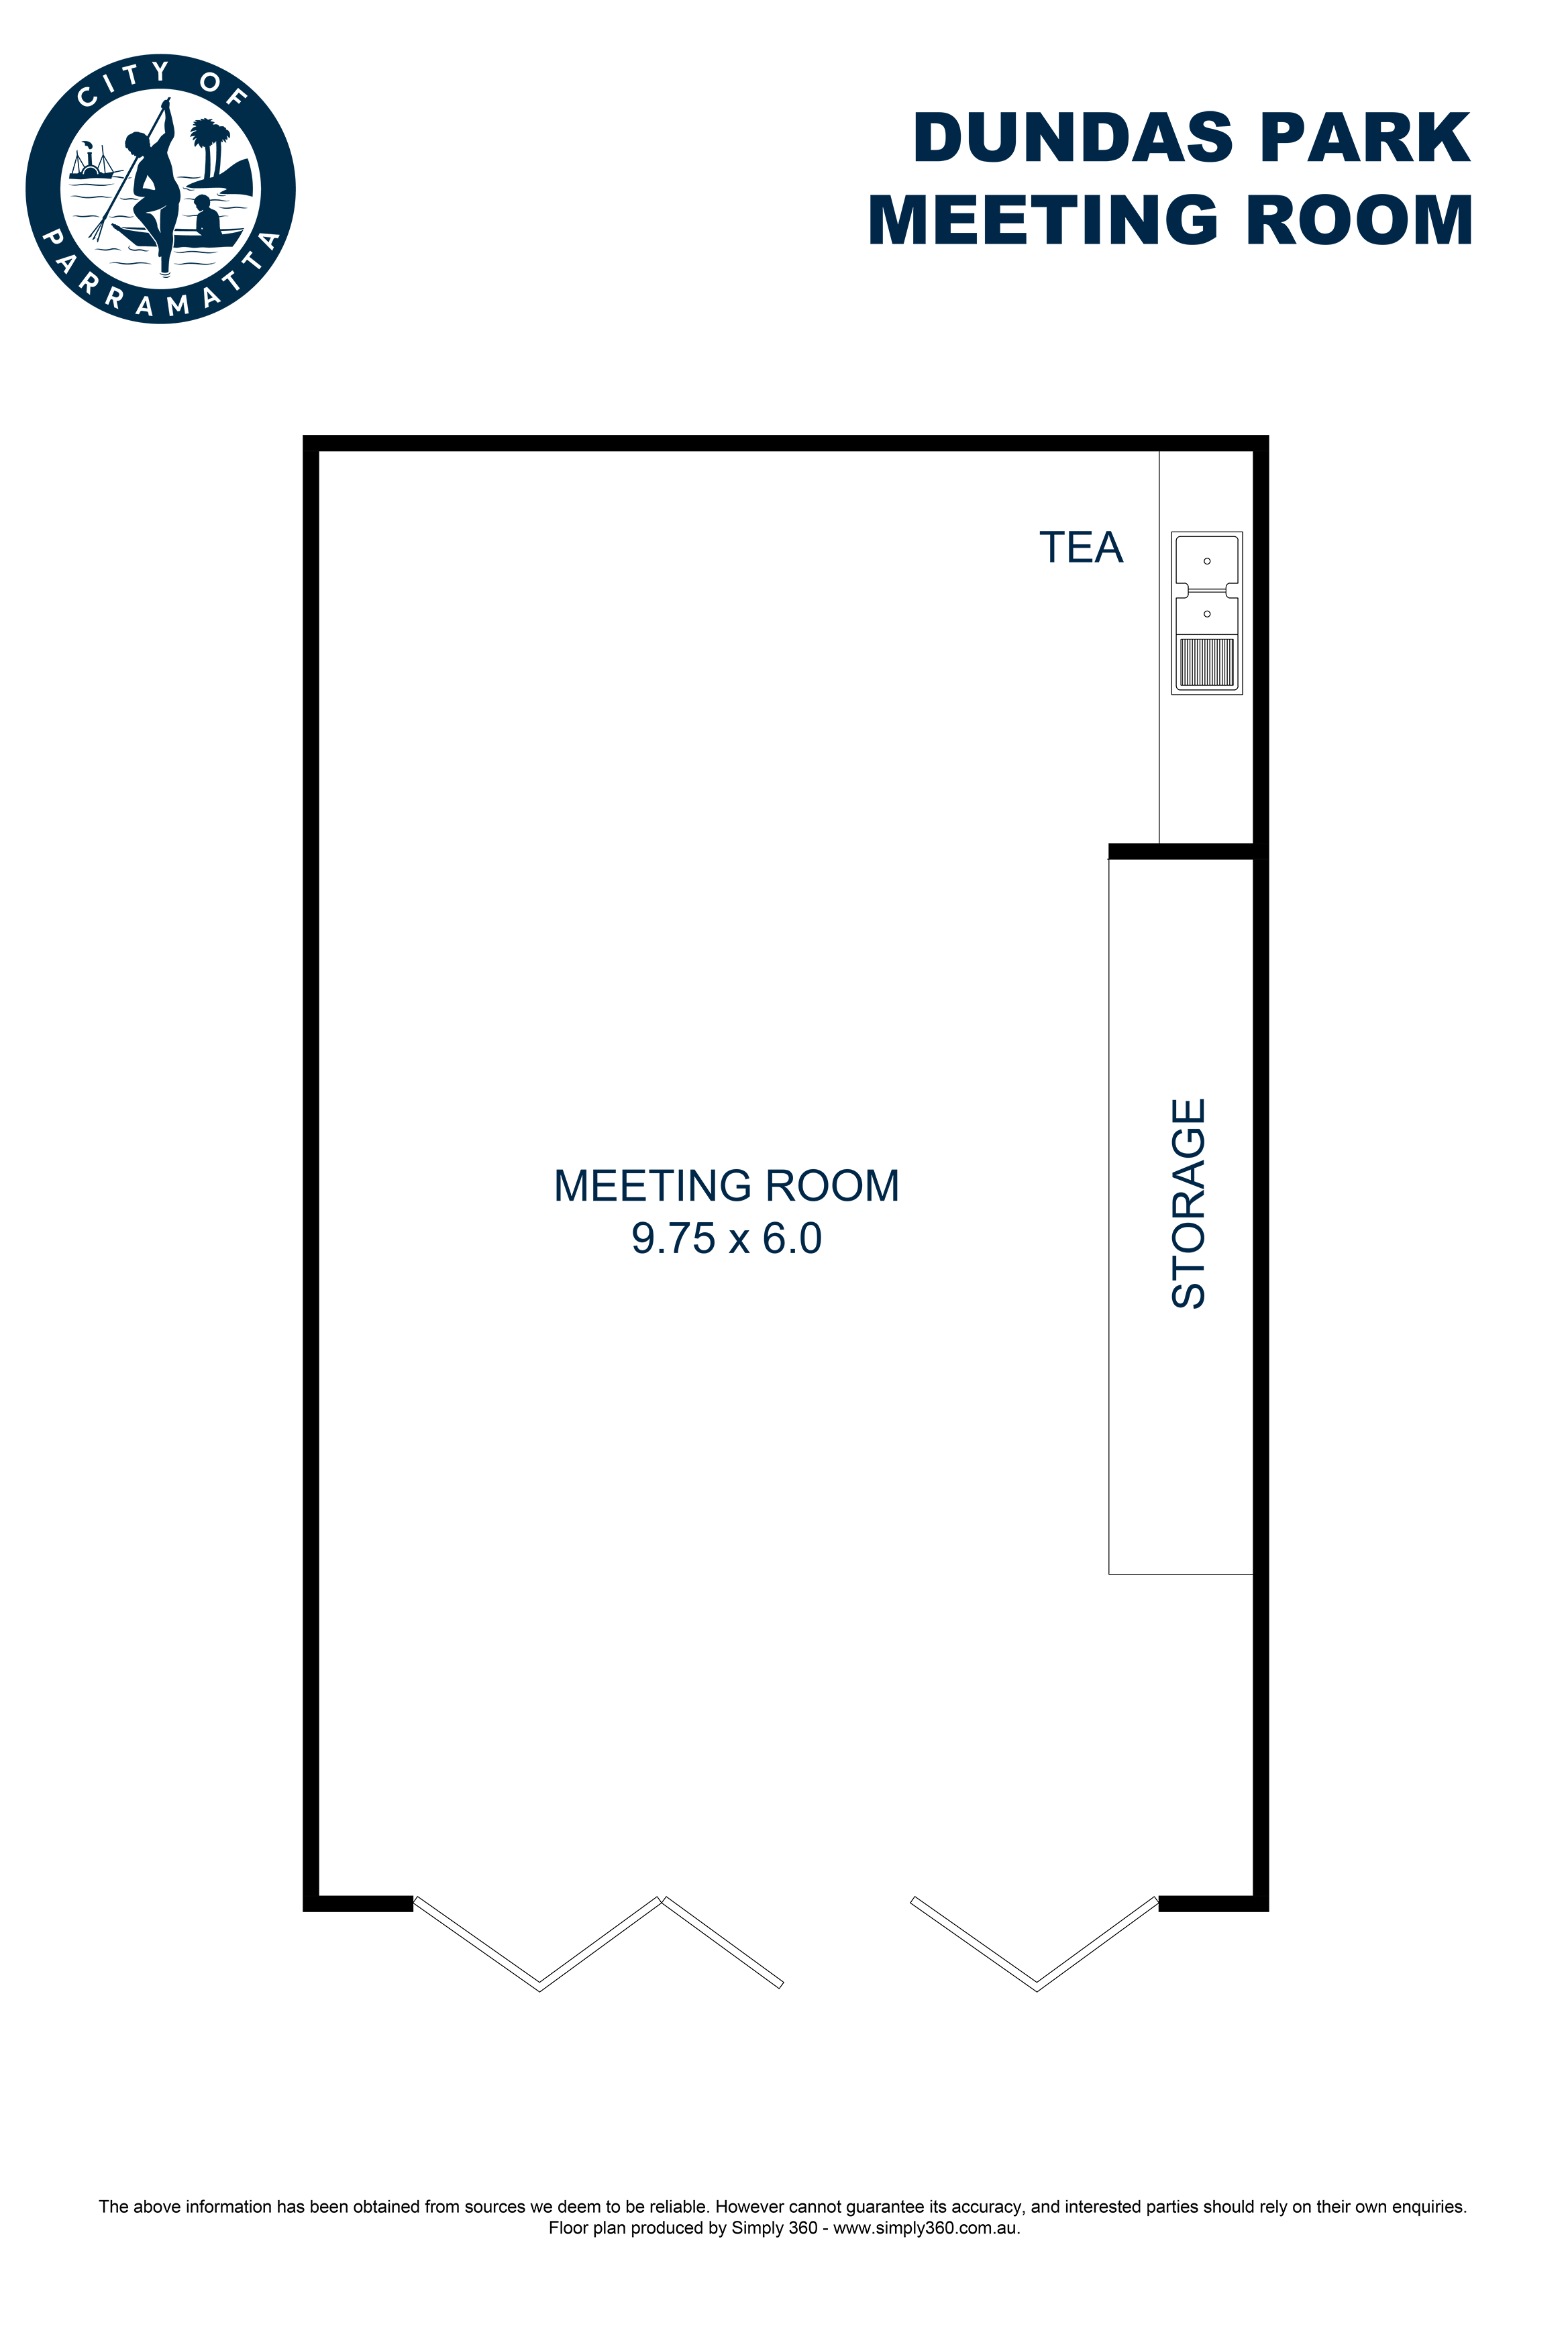 Dundas Park Meeting Room floor plan